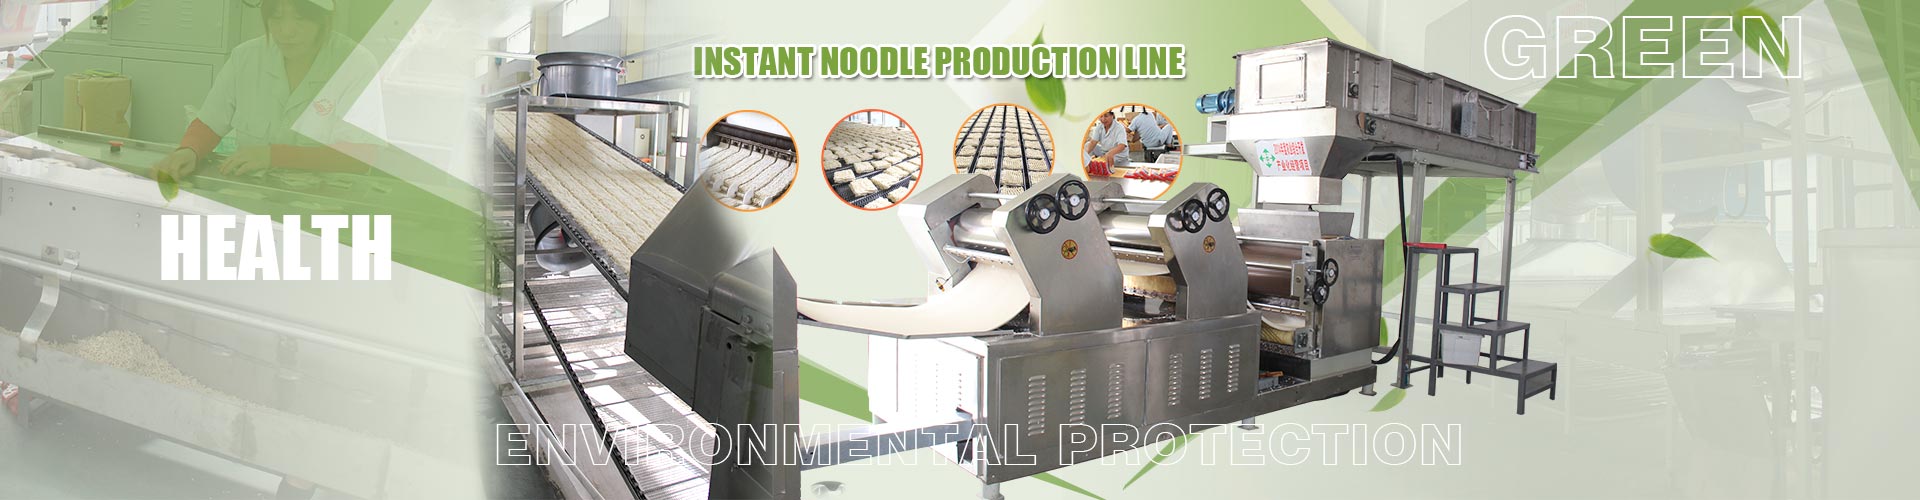 Fried Instant Noodles Manufacturing Plant